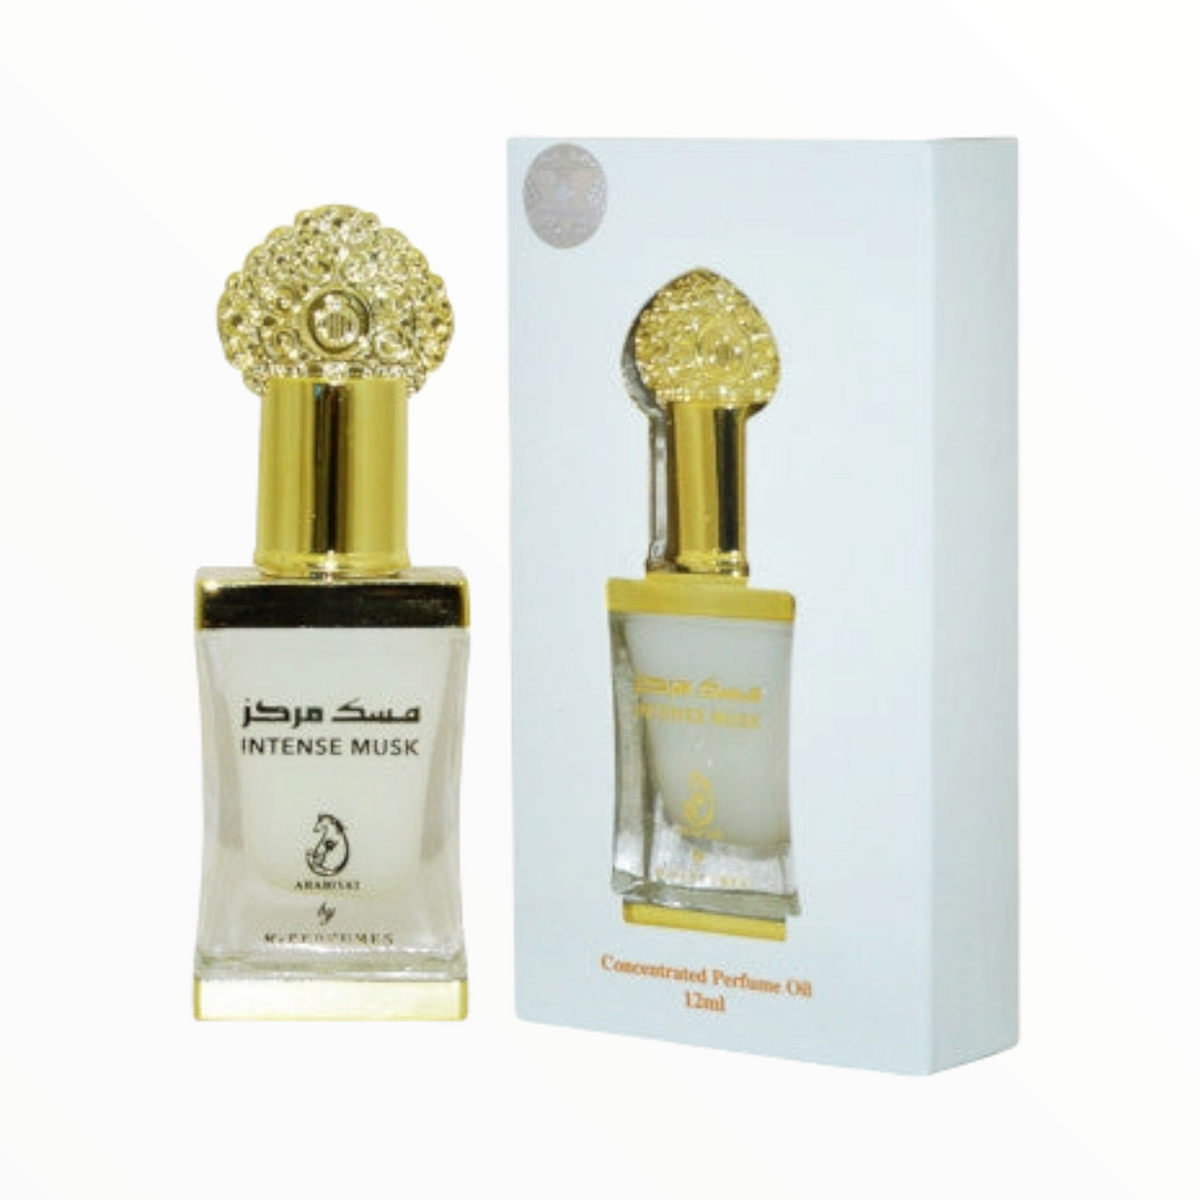 Intense Musk - Attar perfume for women 12 ml